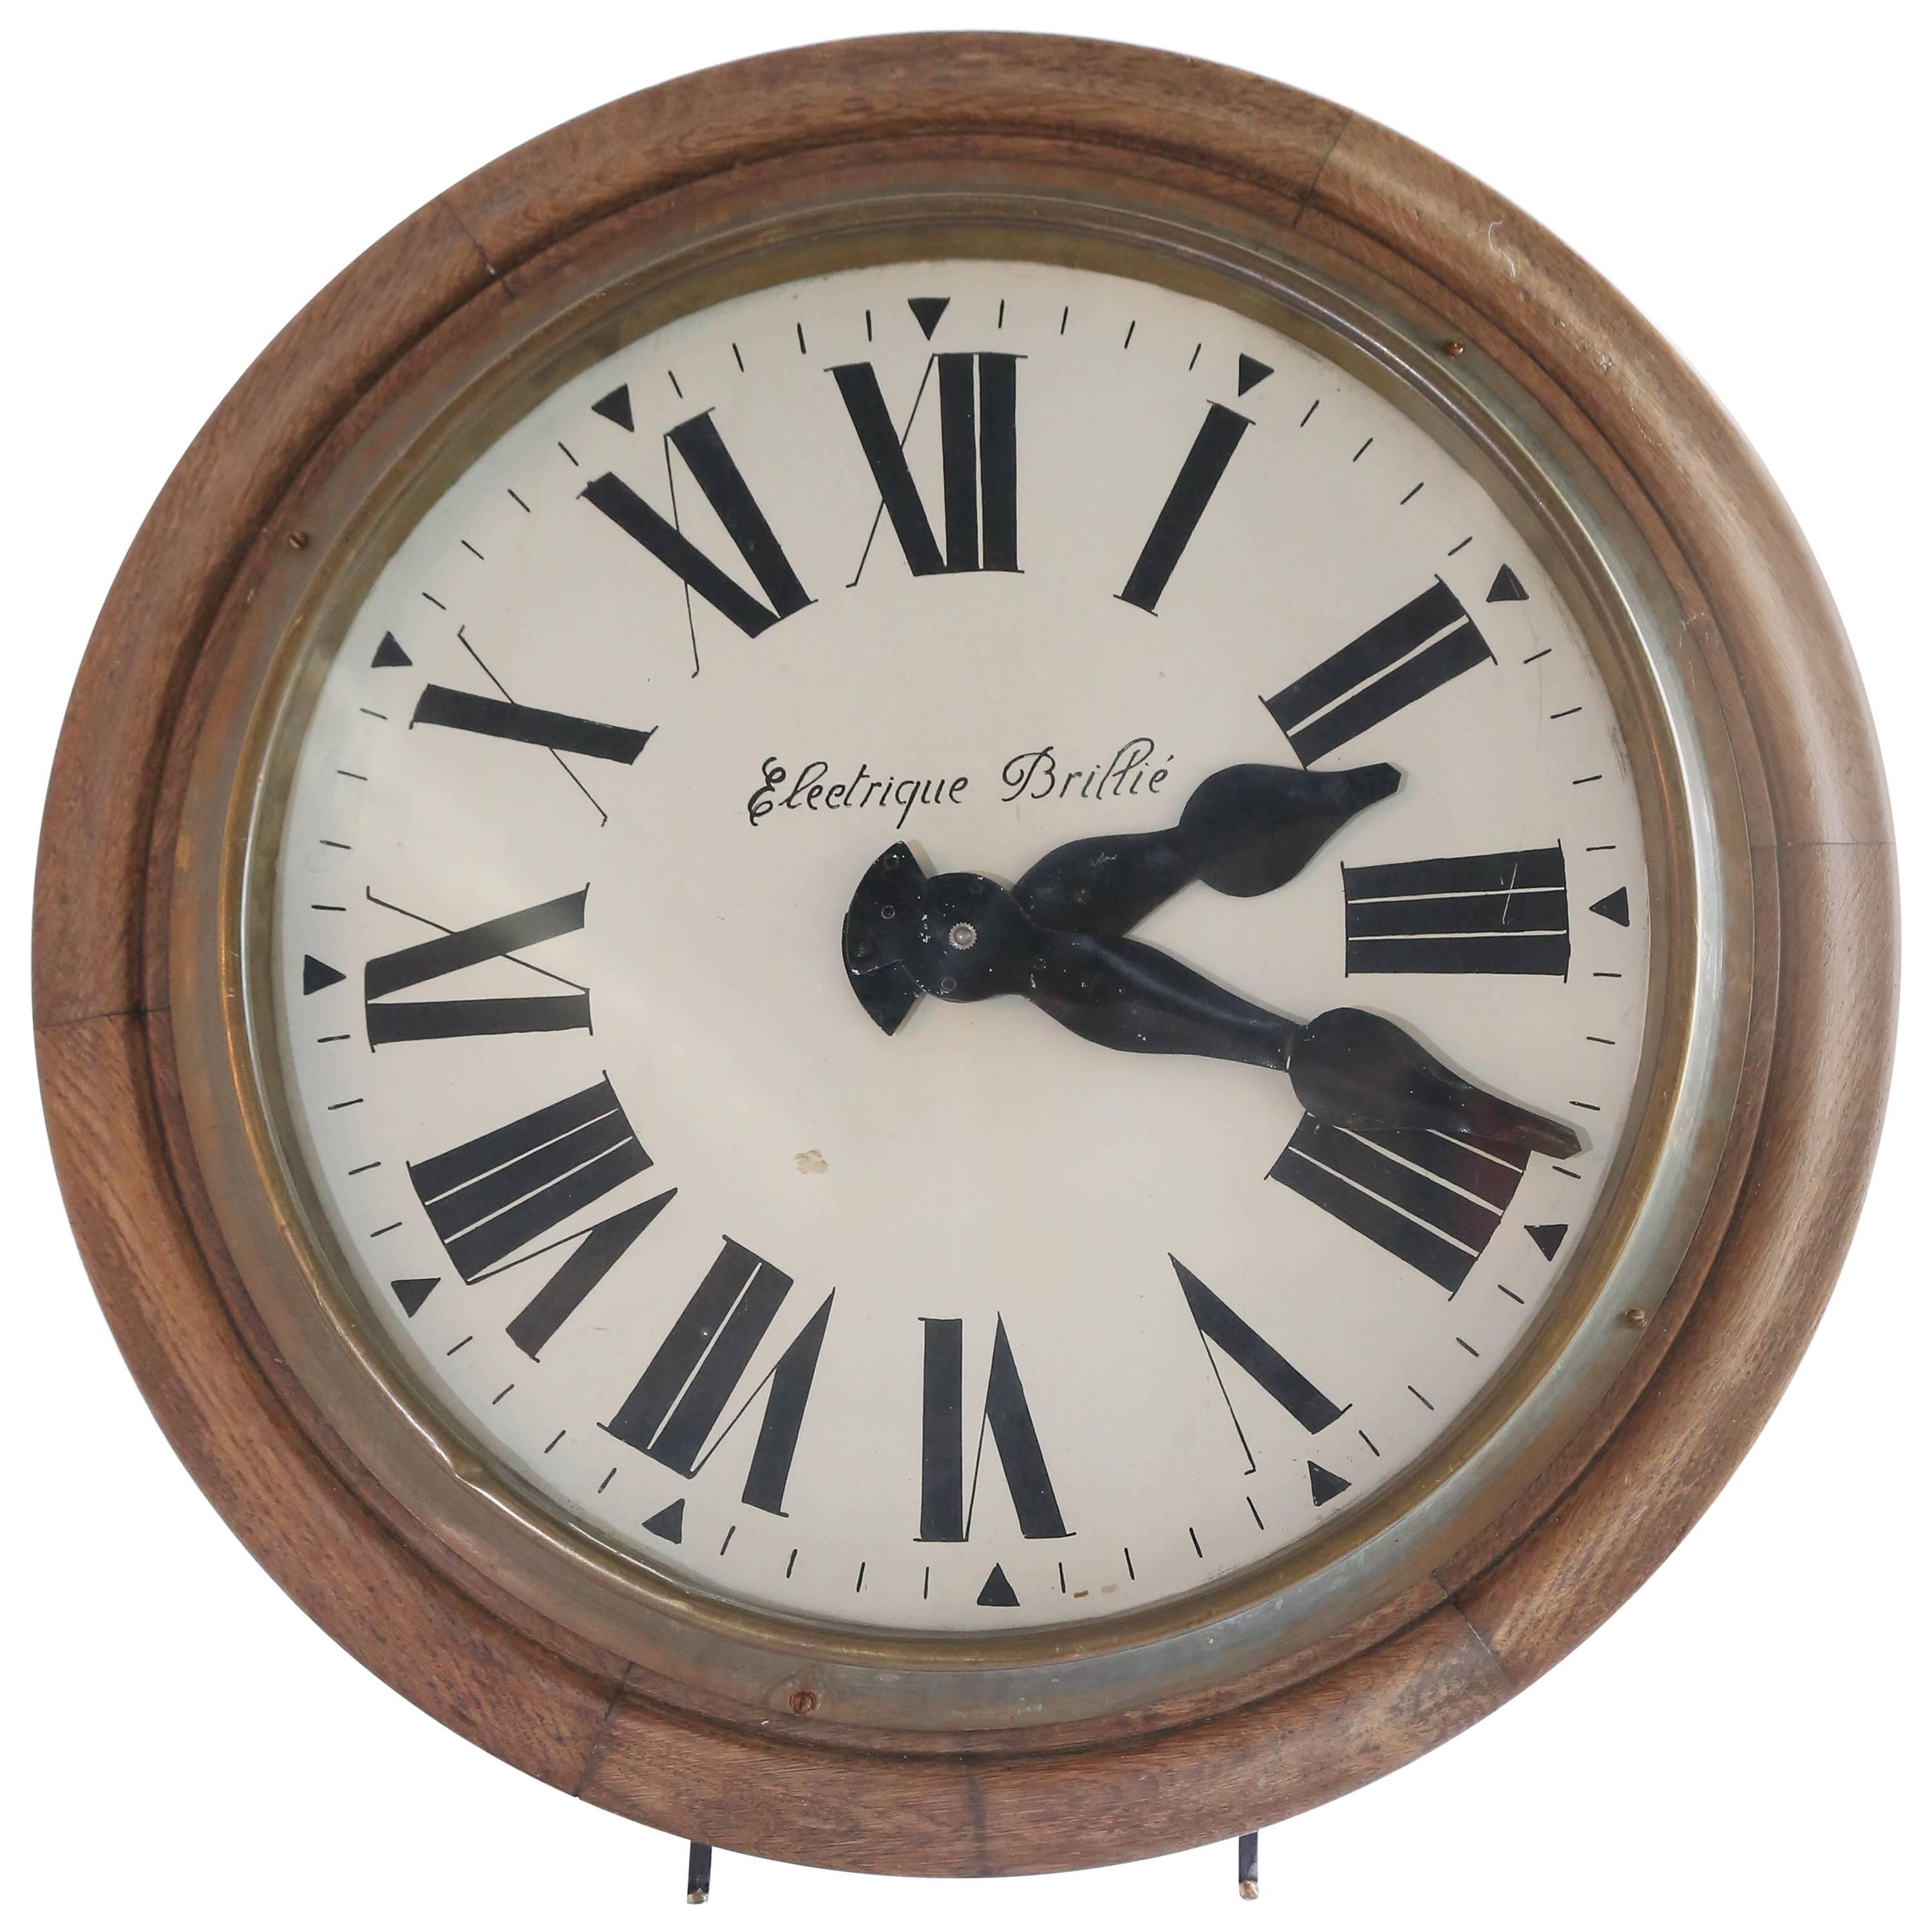 Vintage Brillie Wall Clock